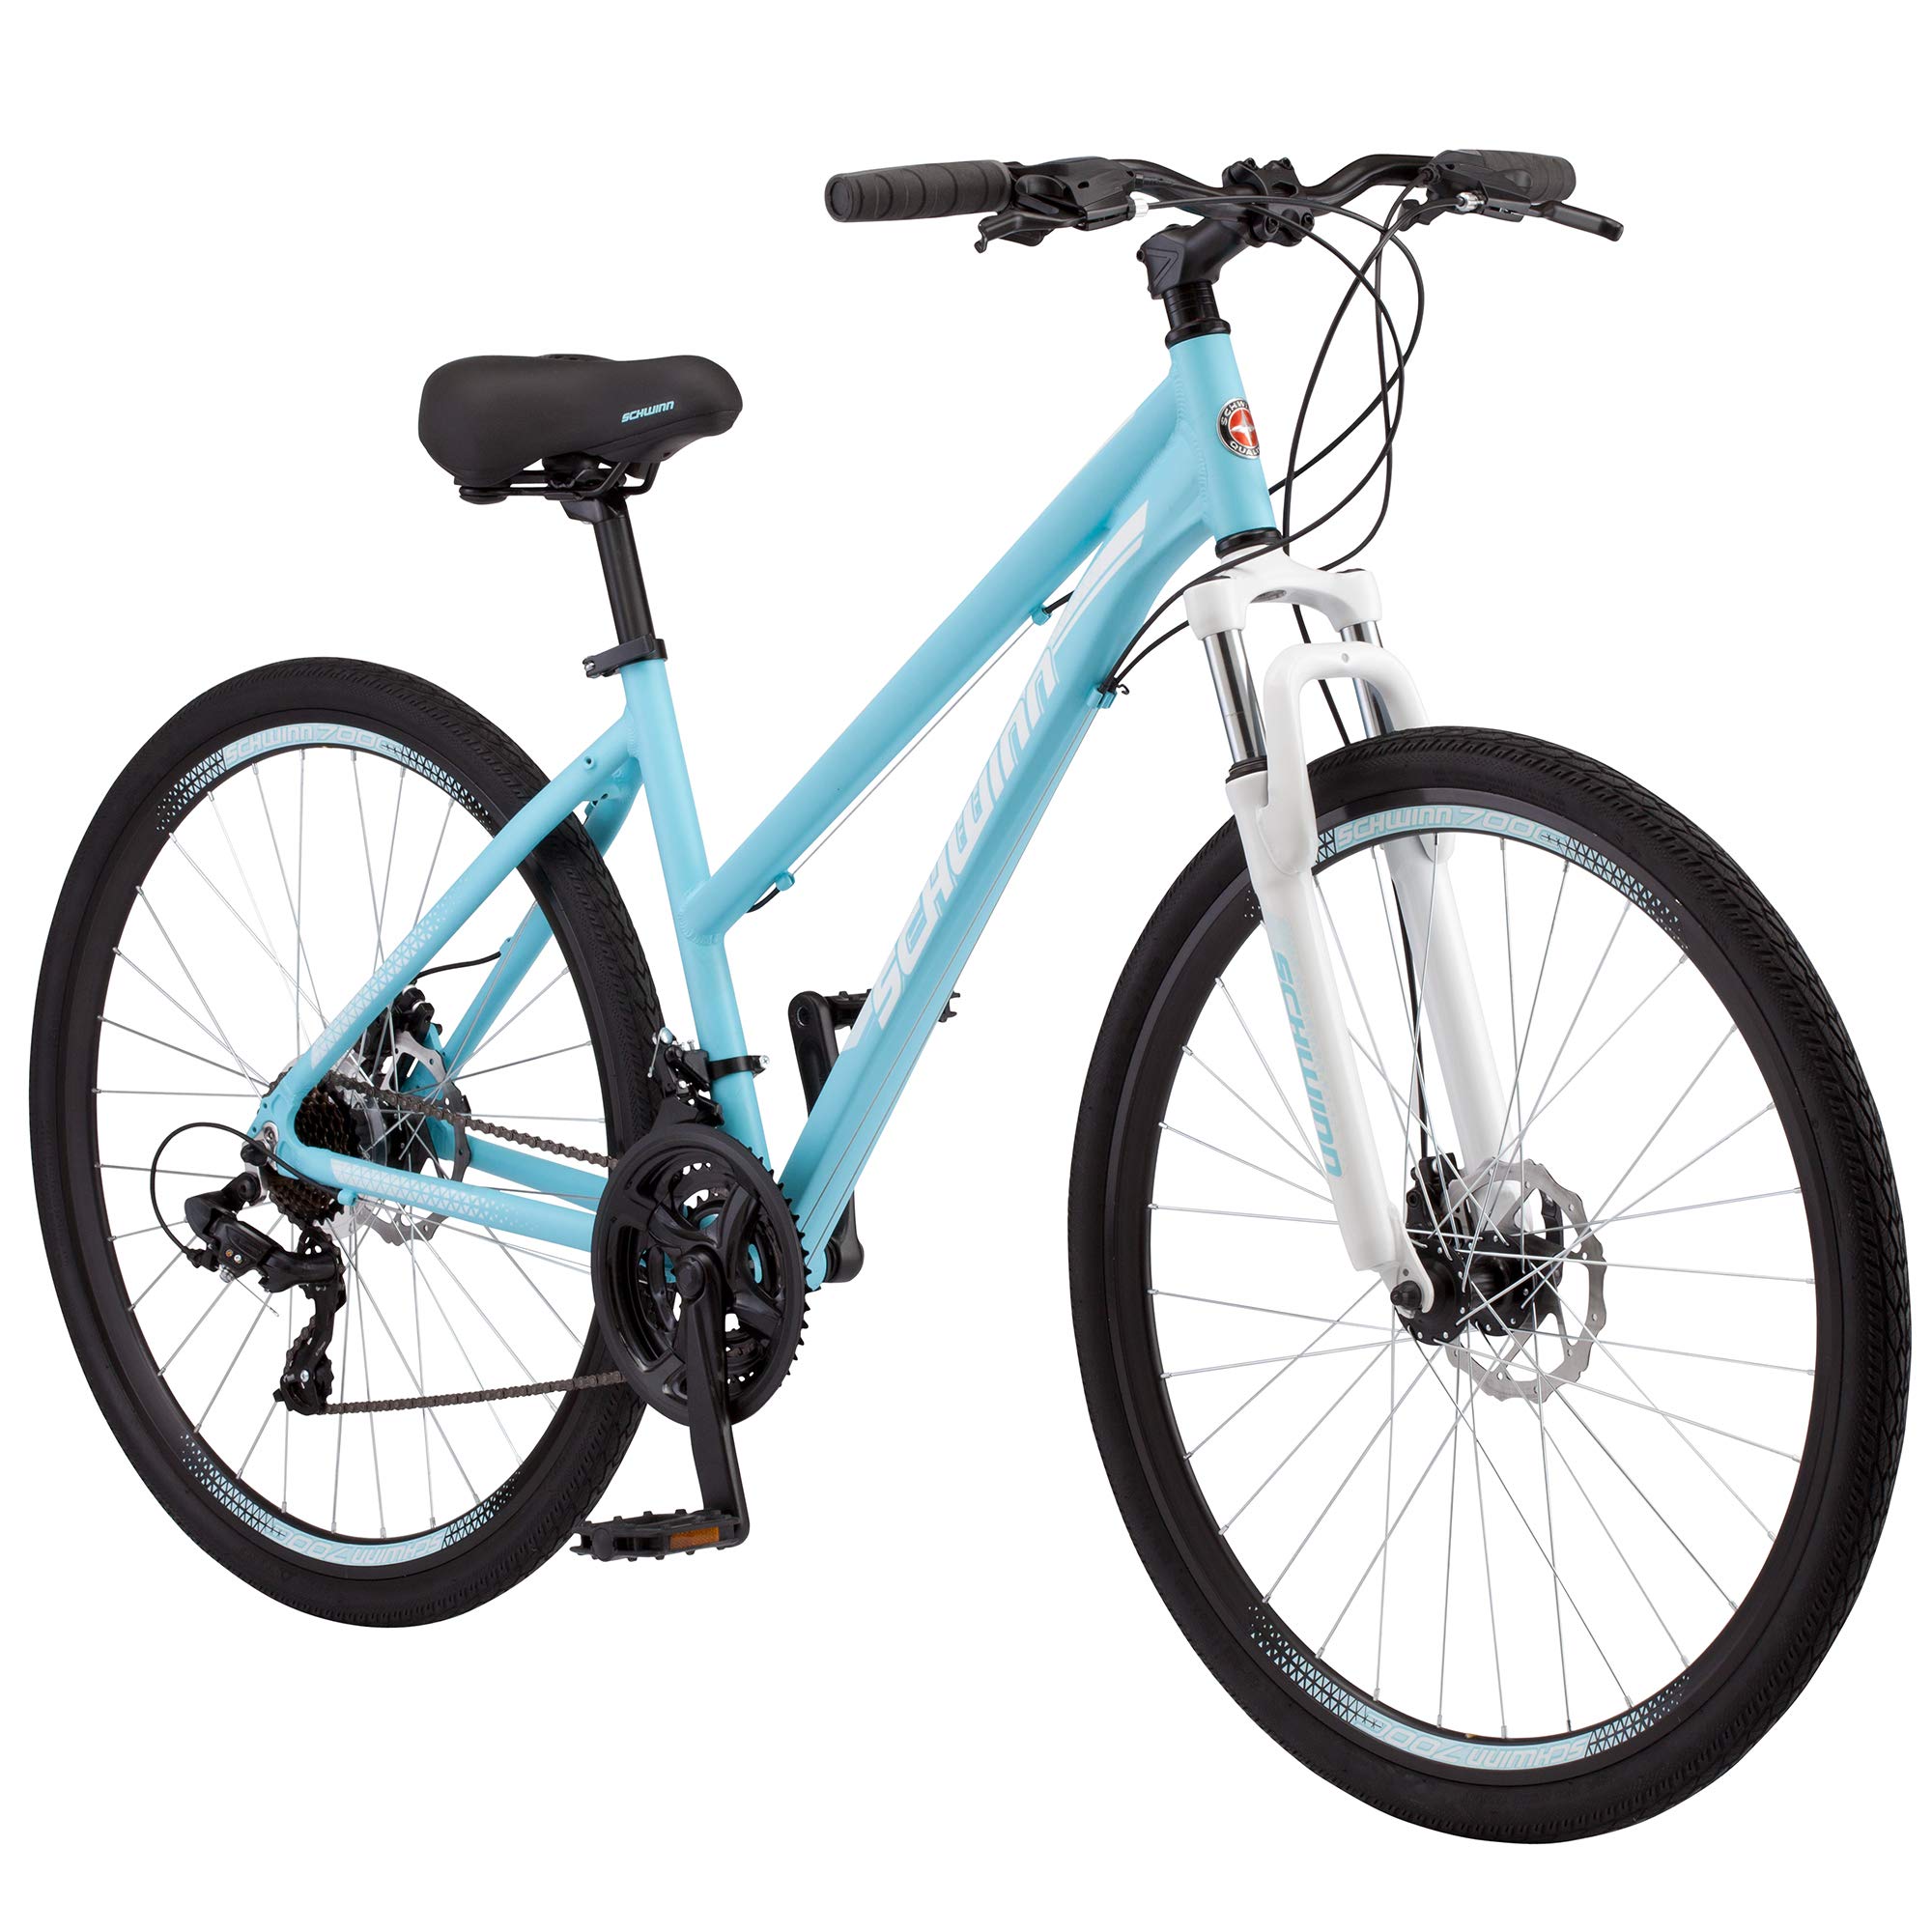 17" 21-Speed Schwinn GTX 2.0 Comfort Adult Hybrid Bike, Dual Sport Bicycle (Light Blue) $370.35 + Free Shipping